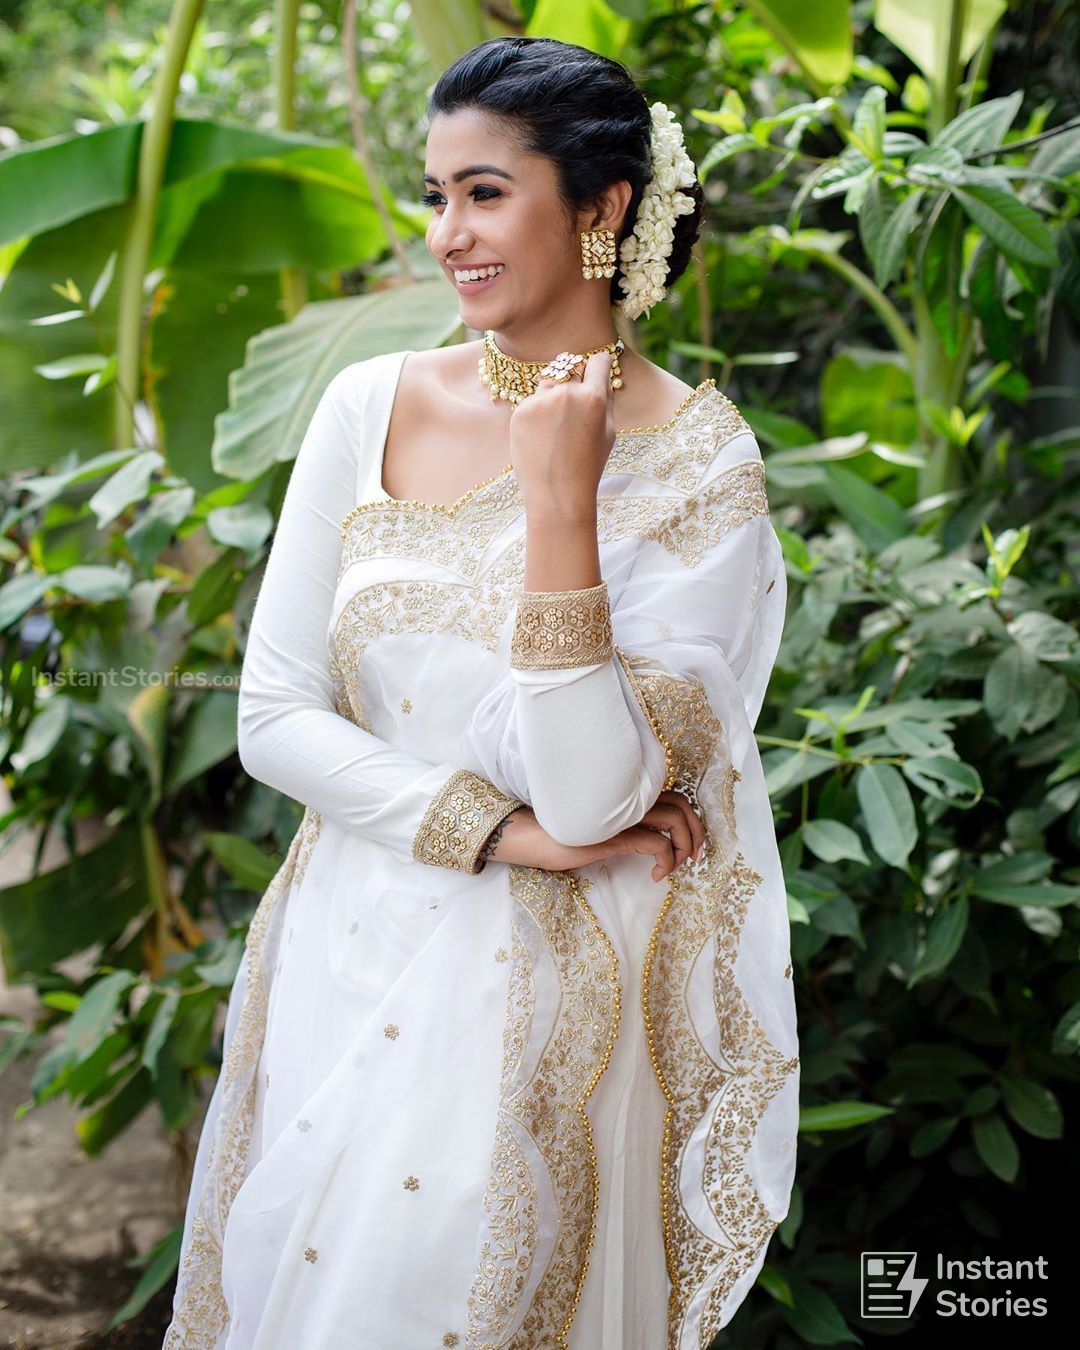 Priya Bhavani Shankars Hot Photoshoot Pictures in White Saree (1080p) (7437) - Priya Bhavani Shankar